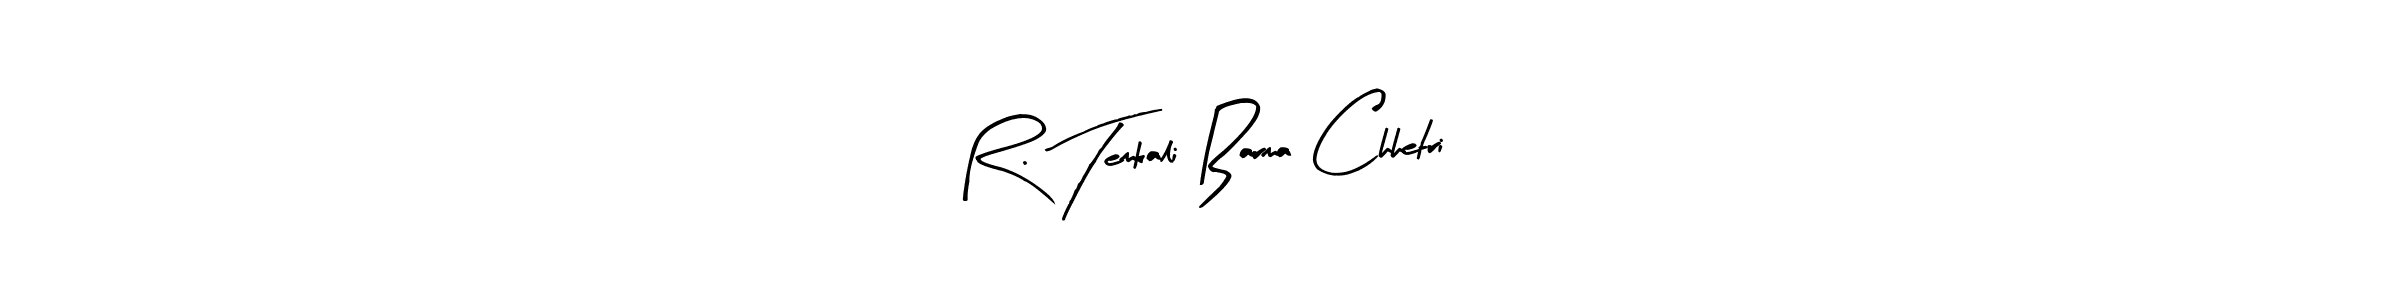 How to Draw R. Temkali Barma Chhetri signature style? Arty Signature is a latest design signature styles for name R. Temkali Barma Chhetri. R. Temkali Barma Chhetri signature style 8 images and pictures png